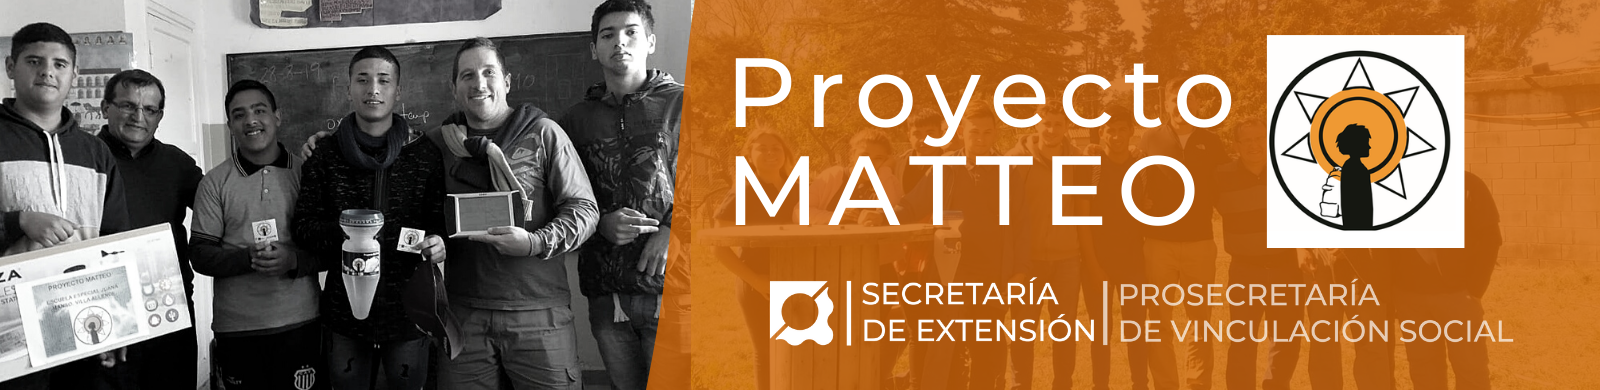 Proyecto matteo.png